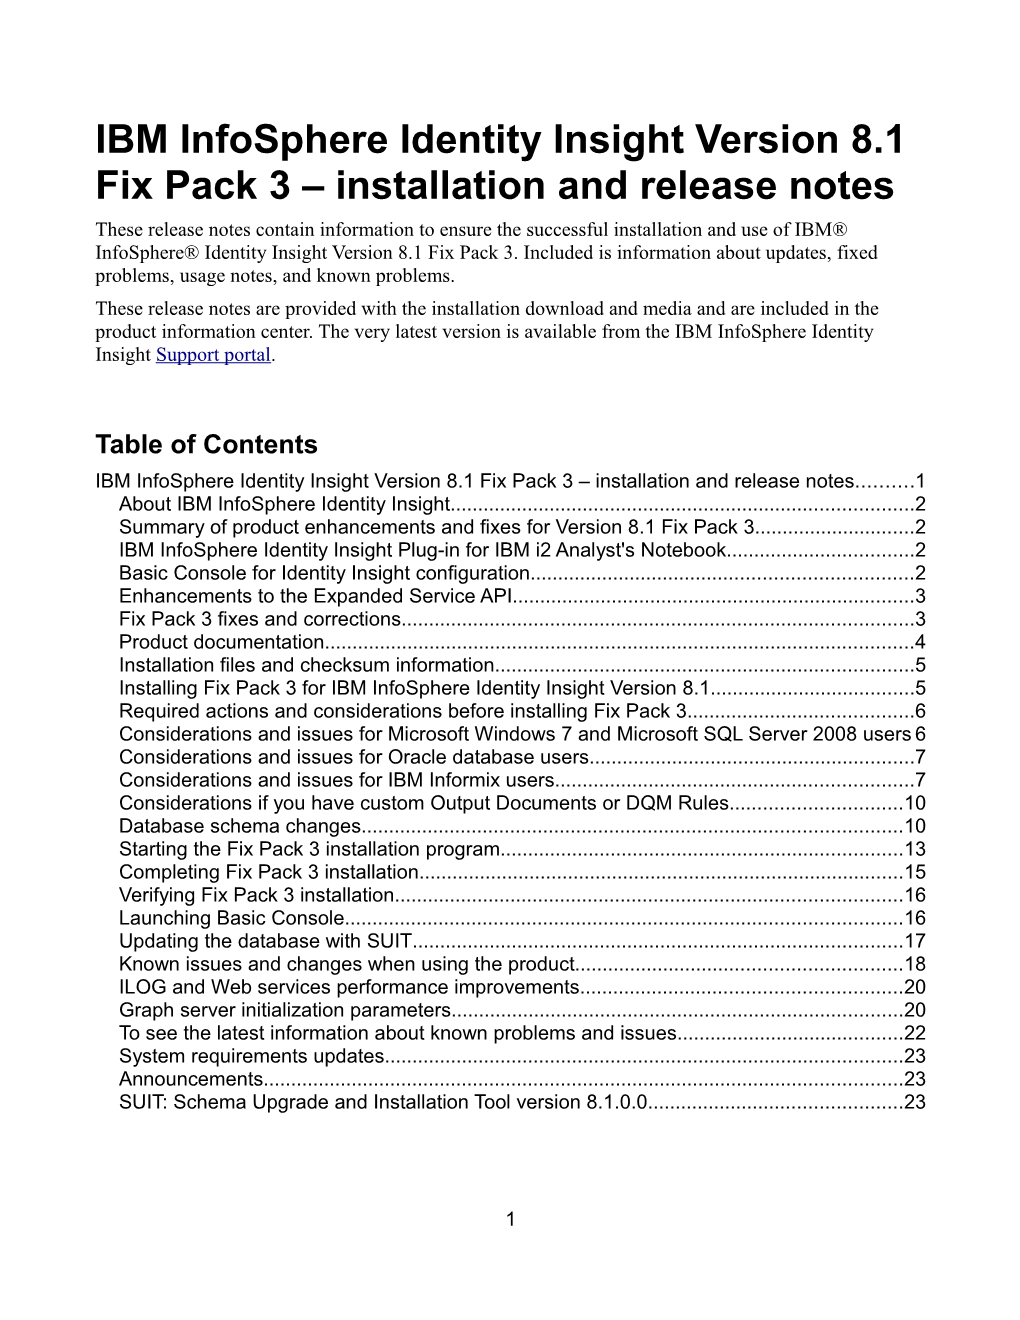 IBM Infosphere Identity Insight Version 8.1 Fix Pack 3 – Installation